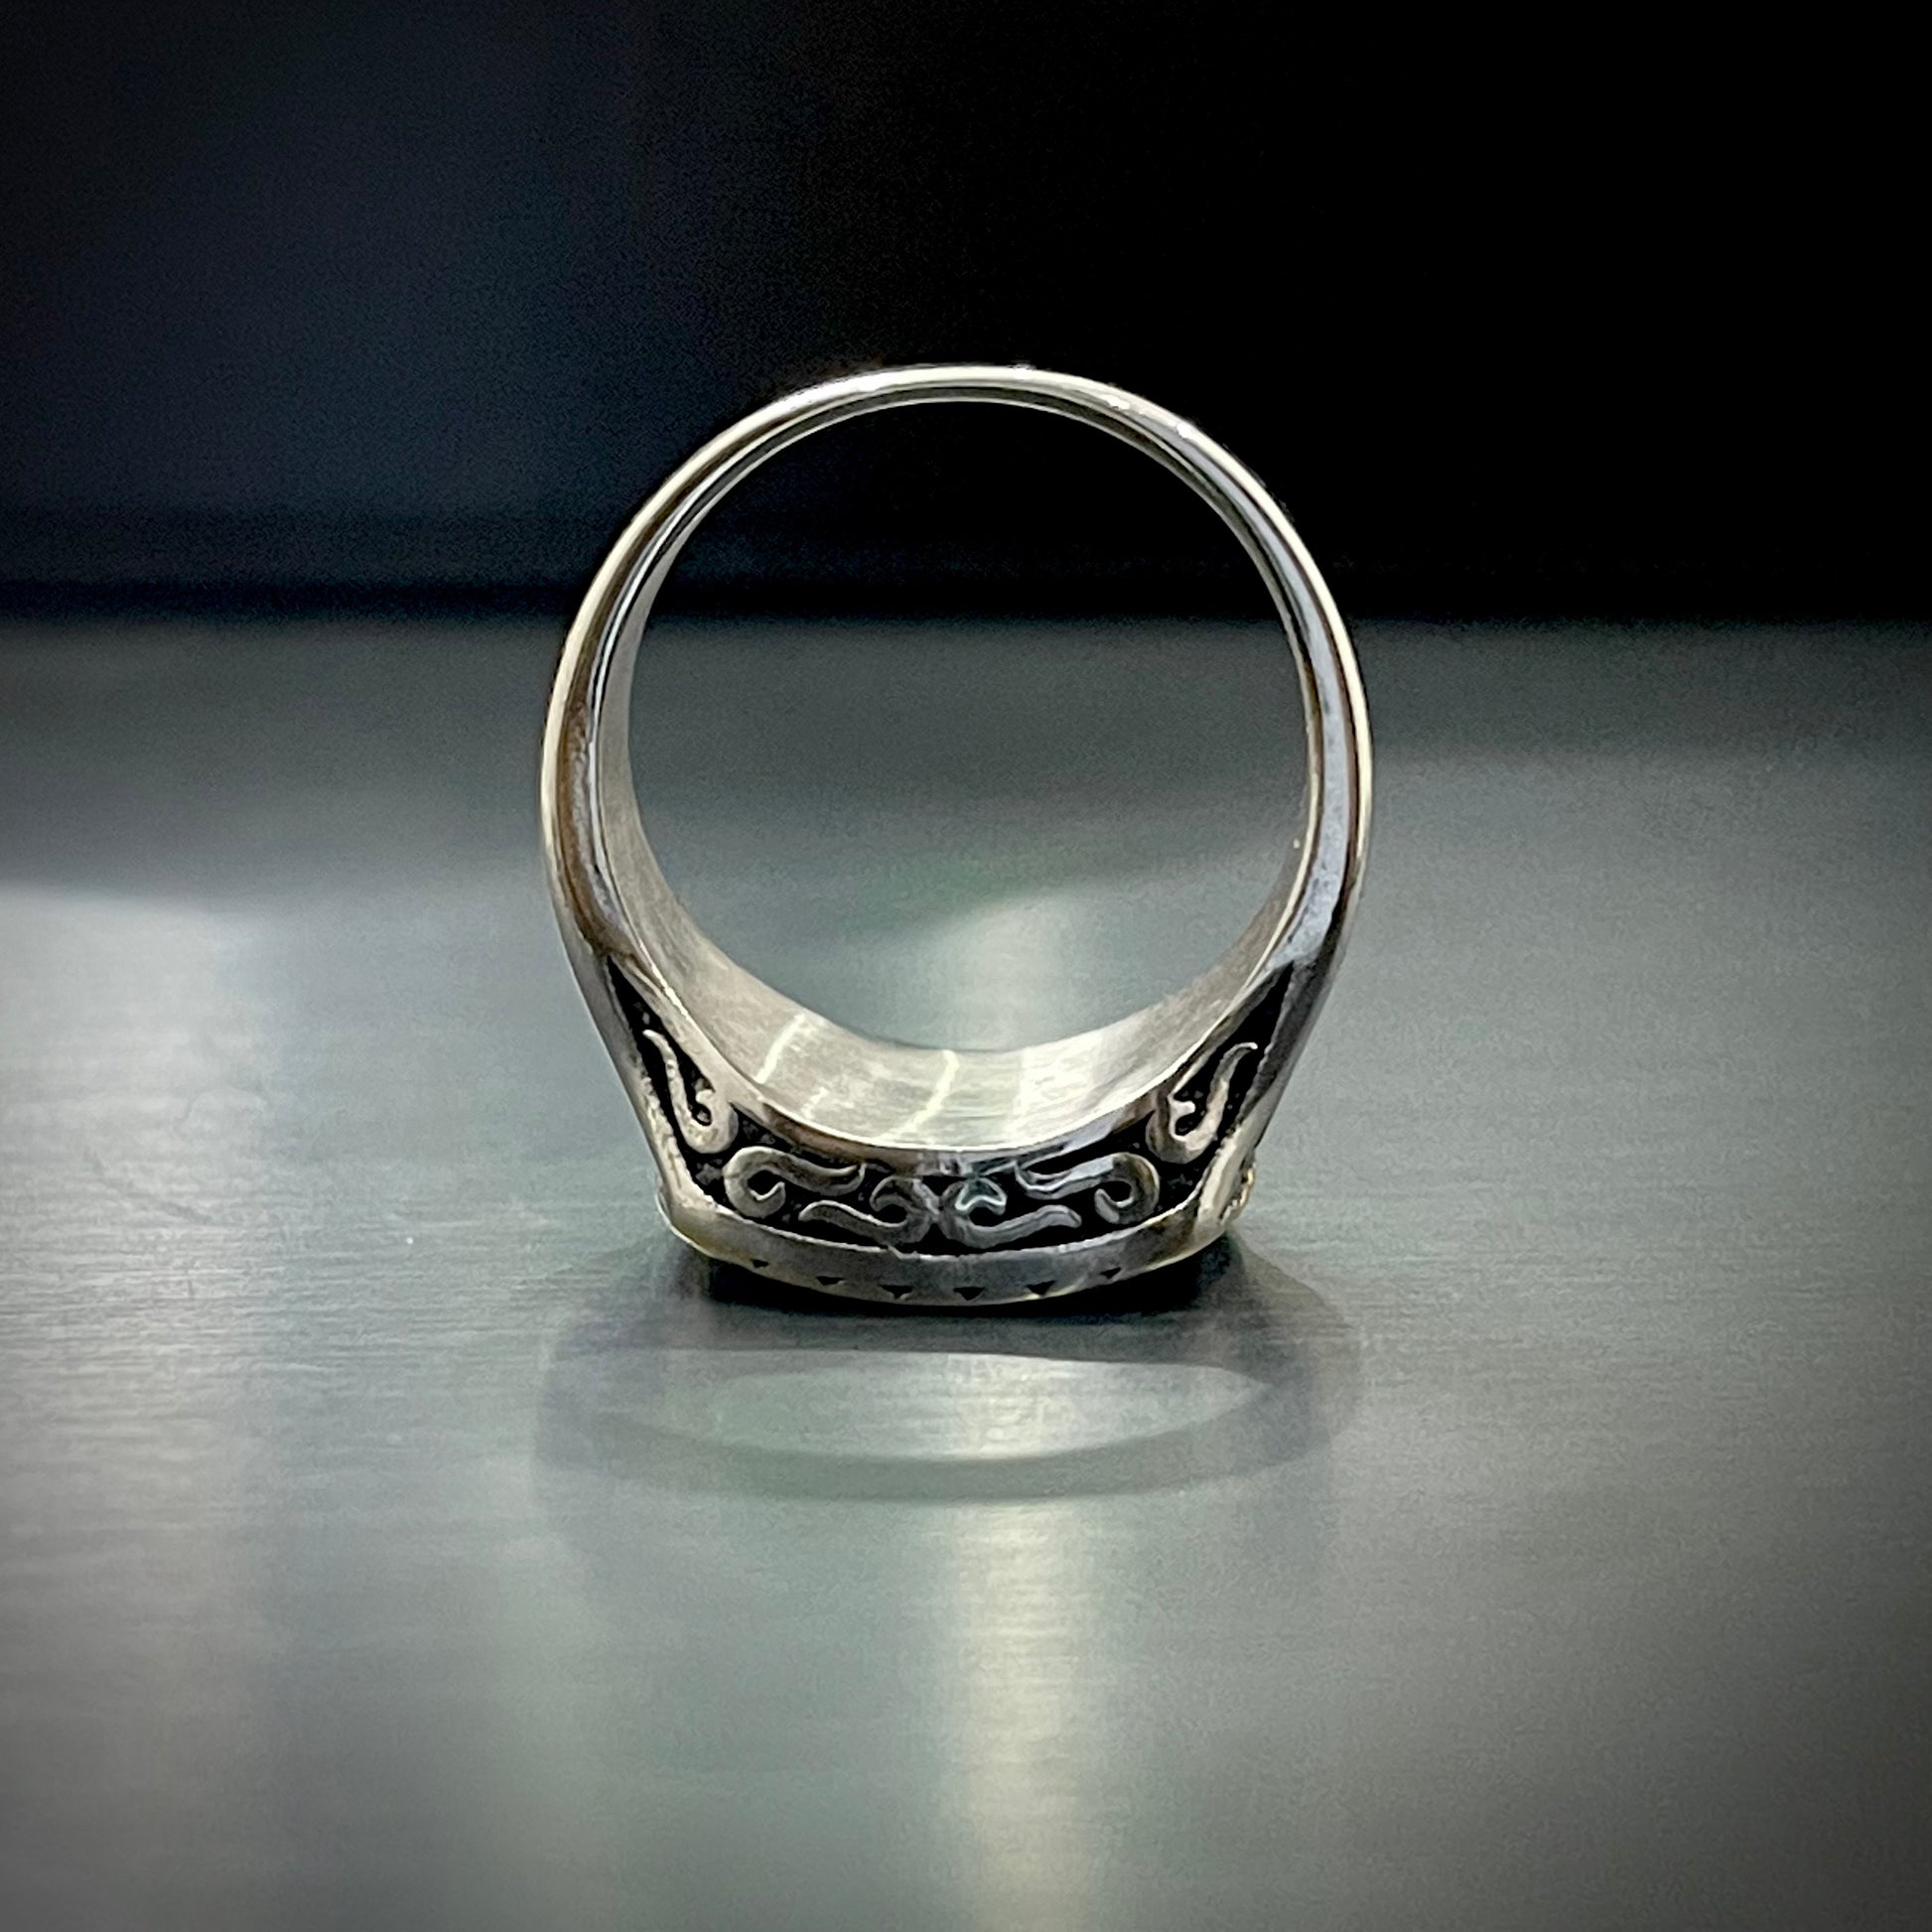 price of men chandi silver ring in pakistan